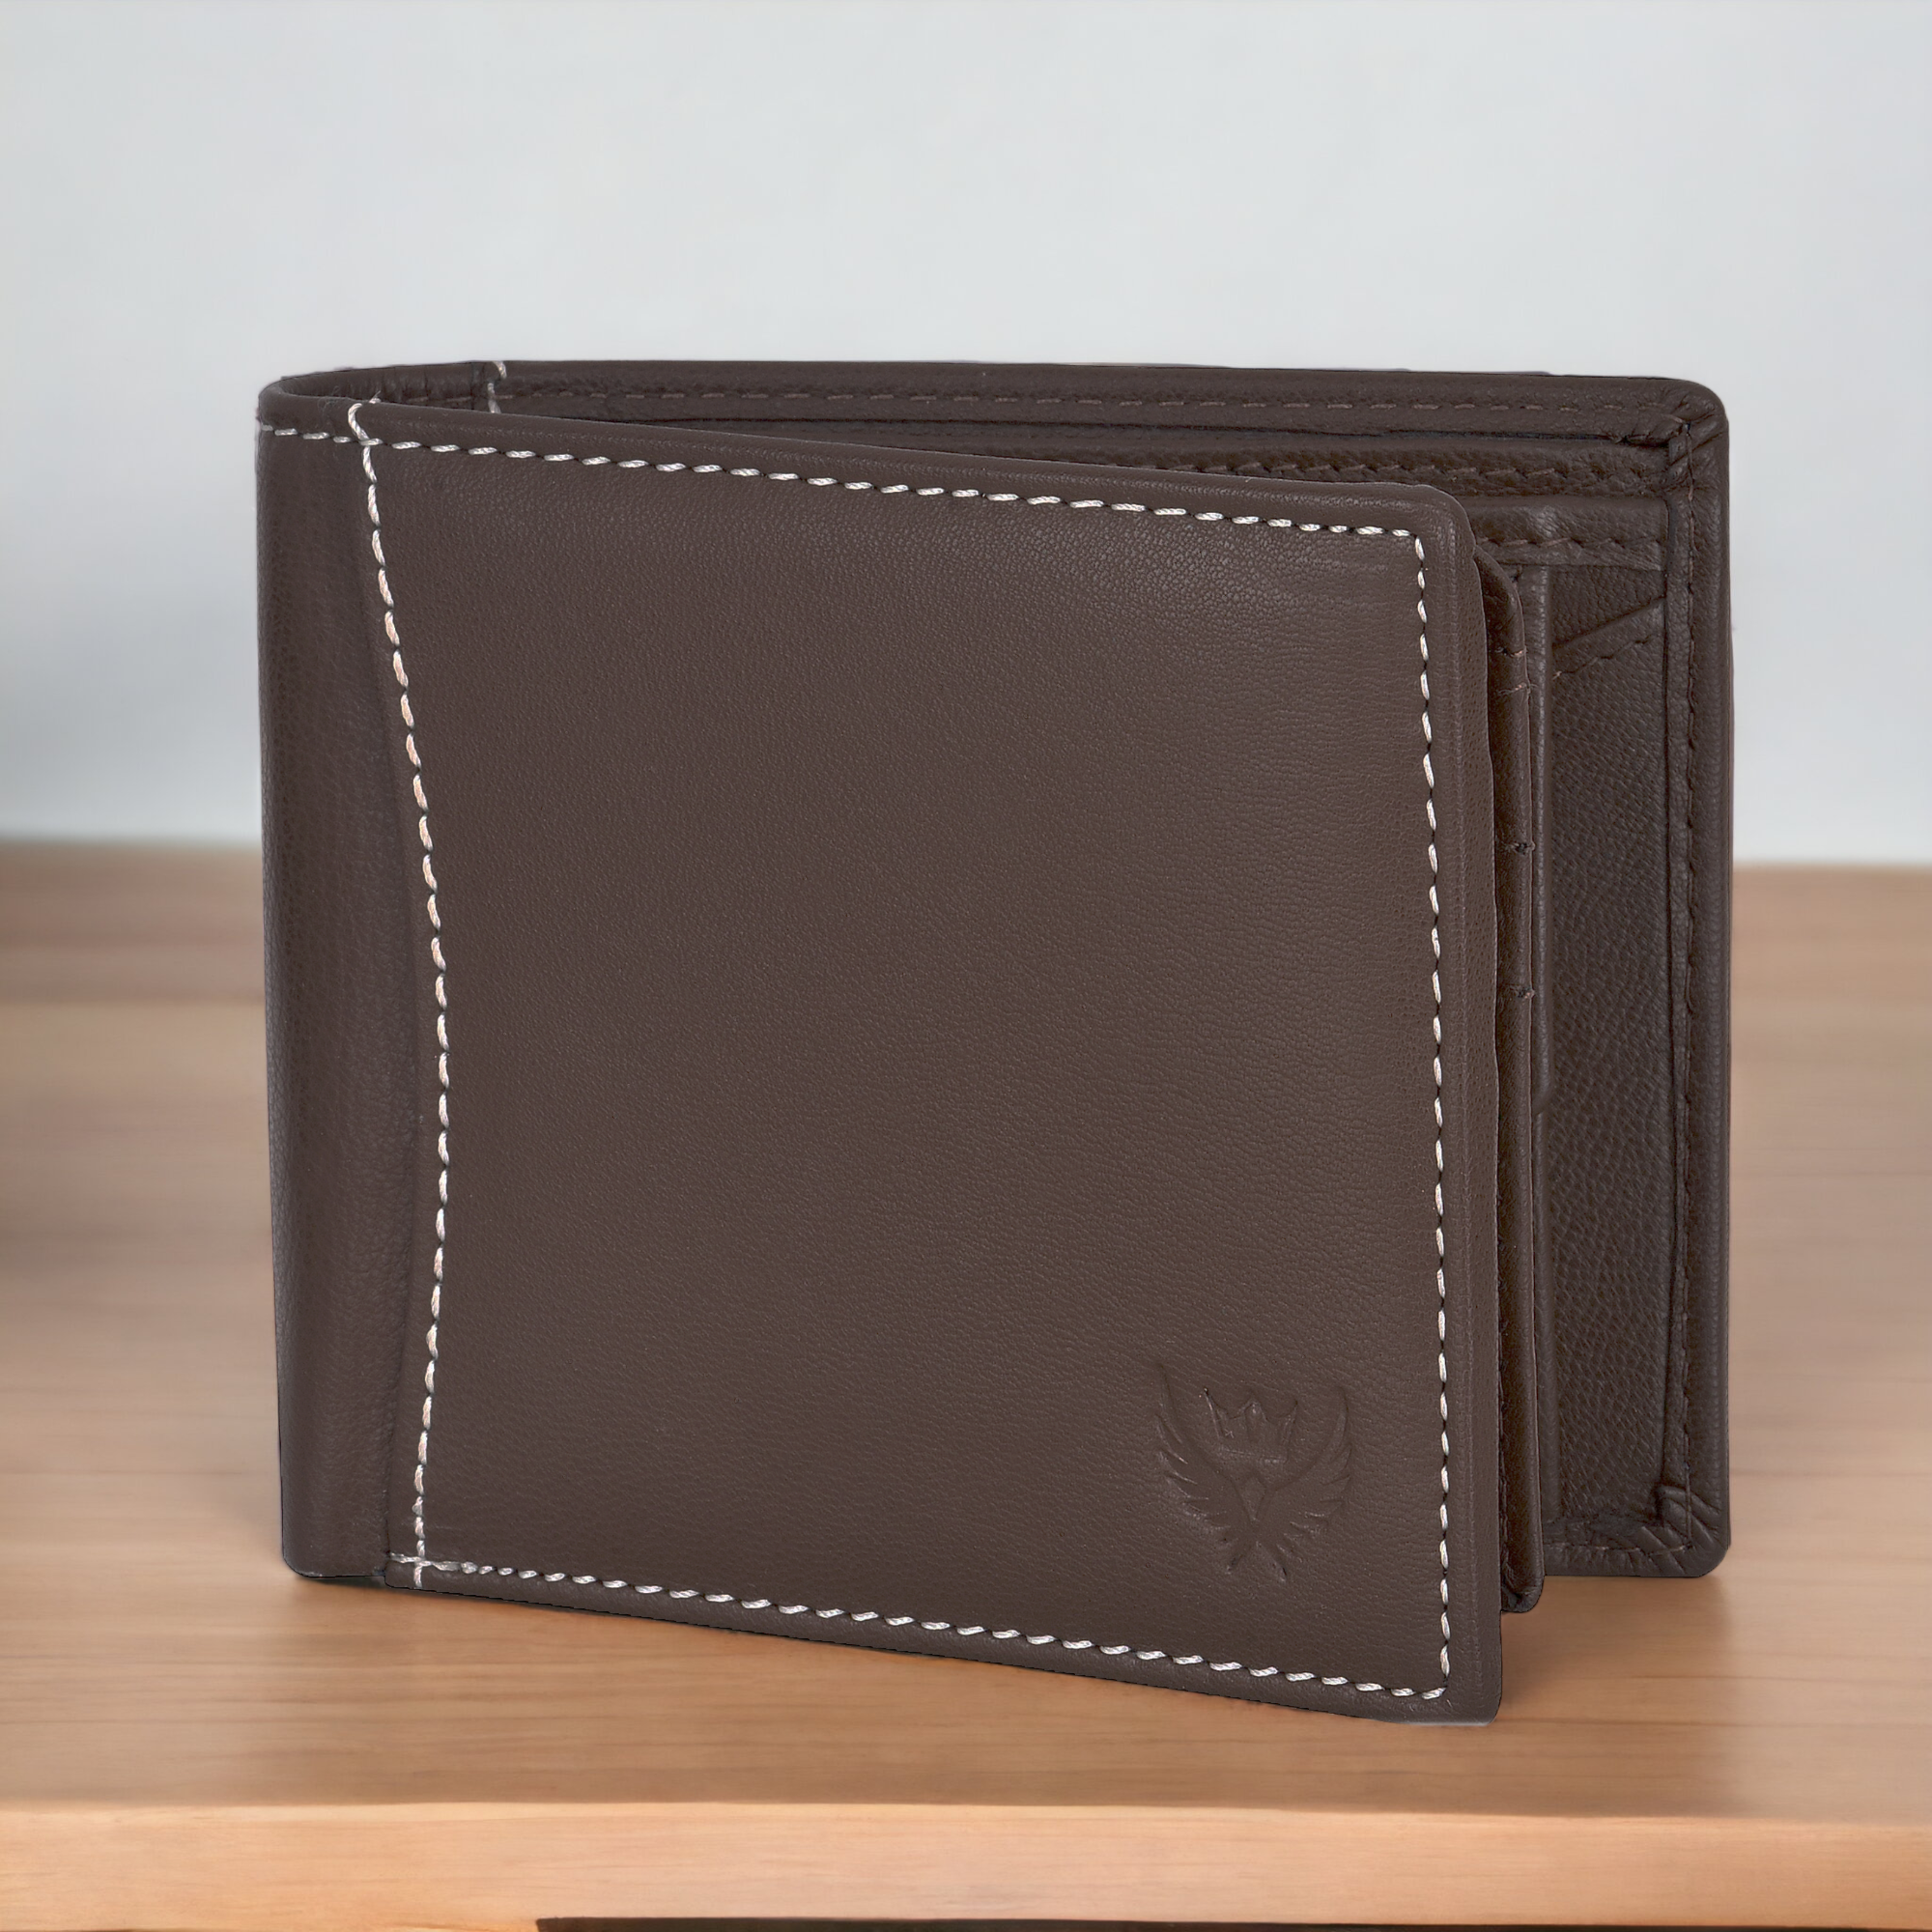 Lorenz Raksha Bandhan Gift Combo for Brother - Bi-Fold PU Leather Wallet and OM Rakhi, Roli, Chandan Tilak, Chawal, Mishri